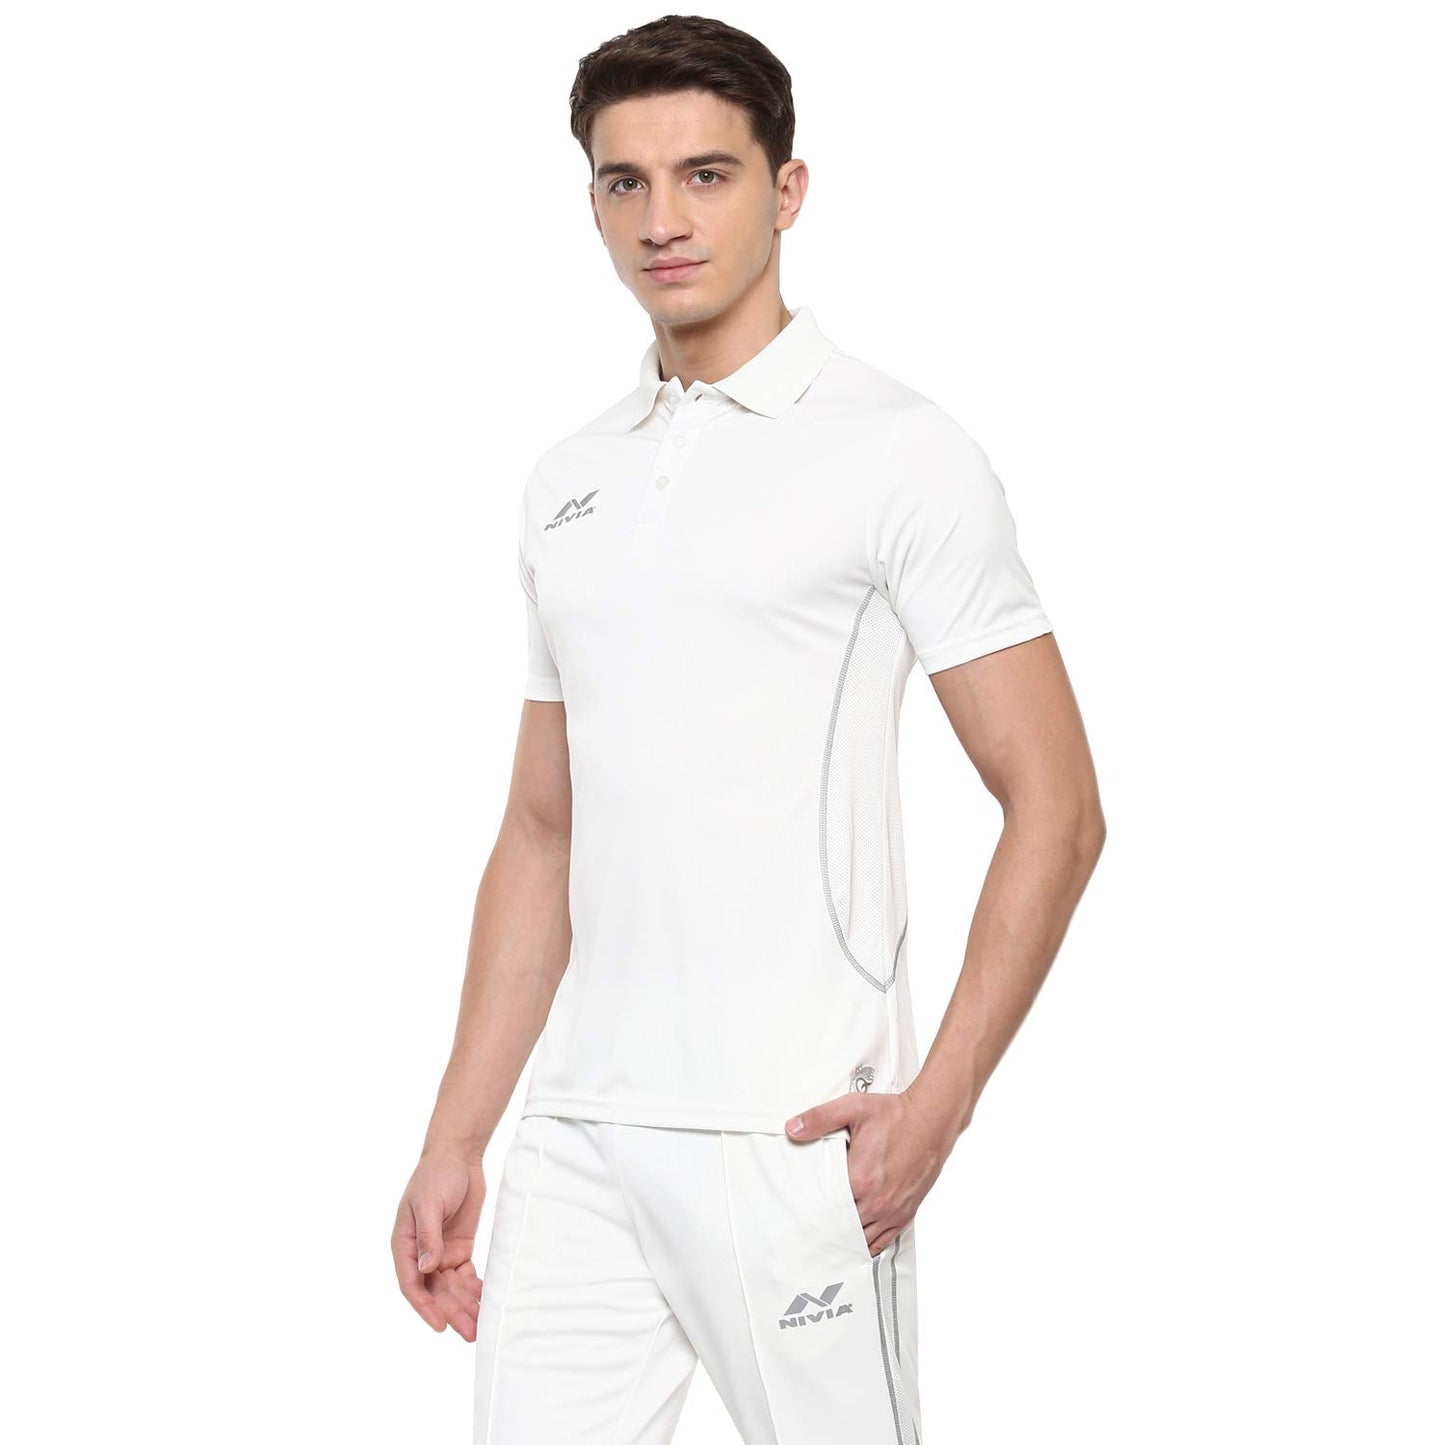 Nivia 2503 Polyester Cricket Jersey for Men (White/Grey) - Best Price online Prokicksports.com